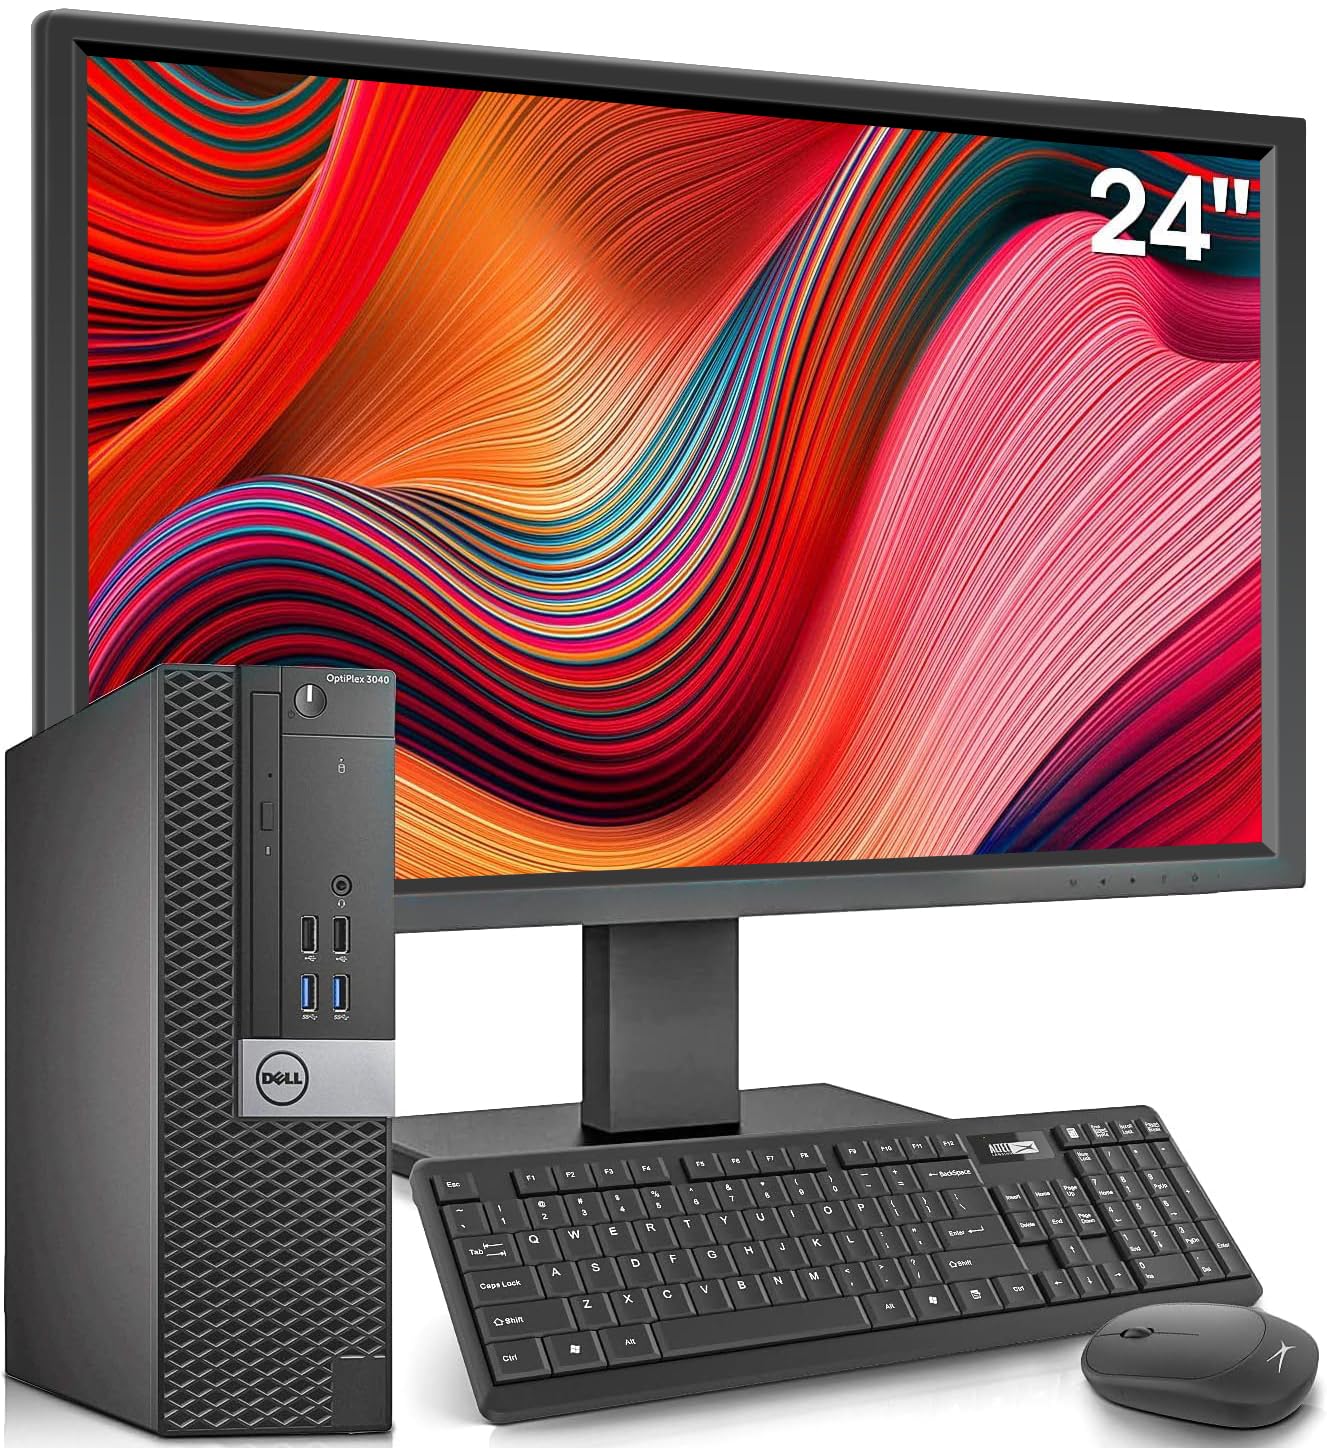 Dell OptiPlex Desktop Computer with 24 inch Monitor PC and Monitor Bundle, i7-6700 3.4GHz,16GB Ram New 512GB SSD,Intel AC7260 Built-in WiFi Bluetooth,HDMI,Refurbished Desktop,Windows 10 Pro (Renewed)